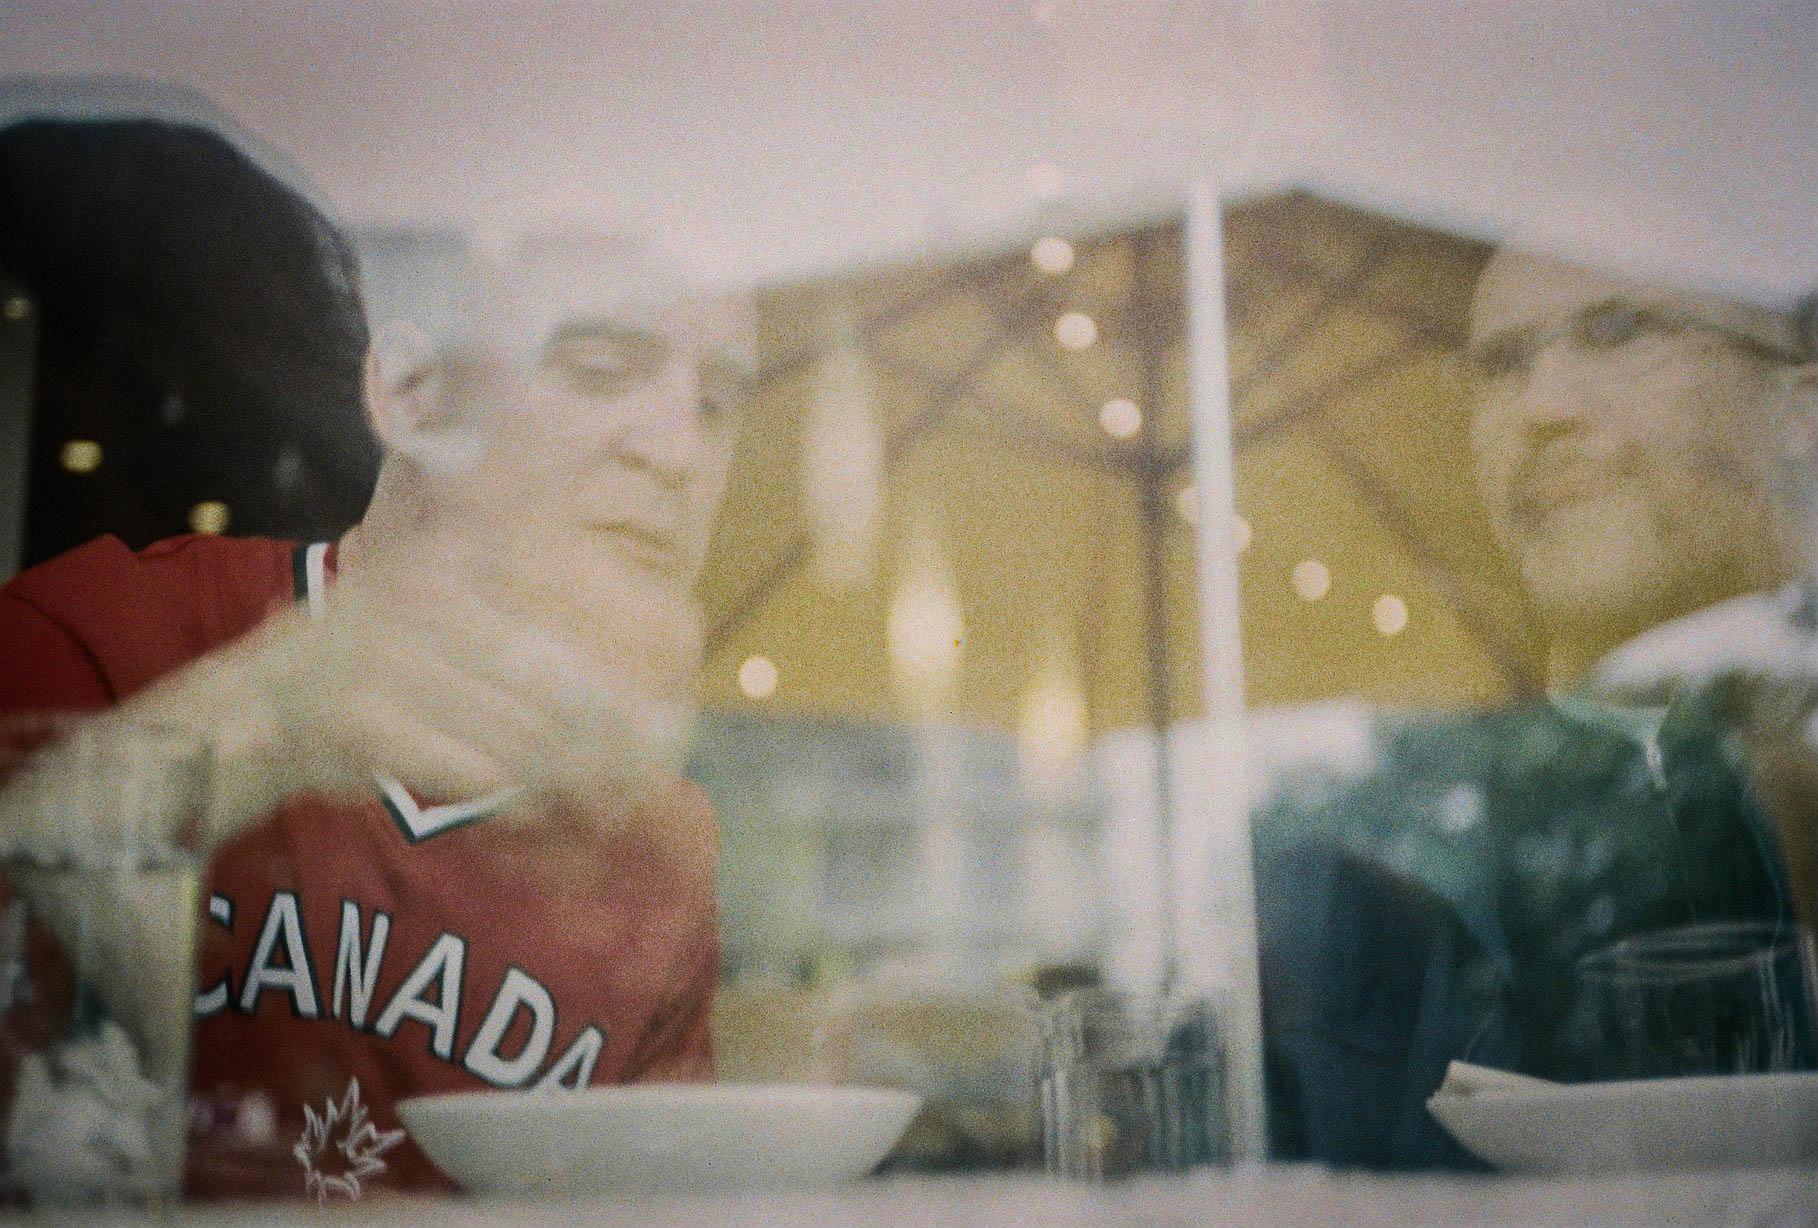  Men eating lunch in window Vancouver Rollei FX35 Fujicolor 400 film 7.16 